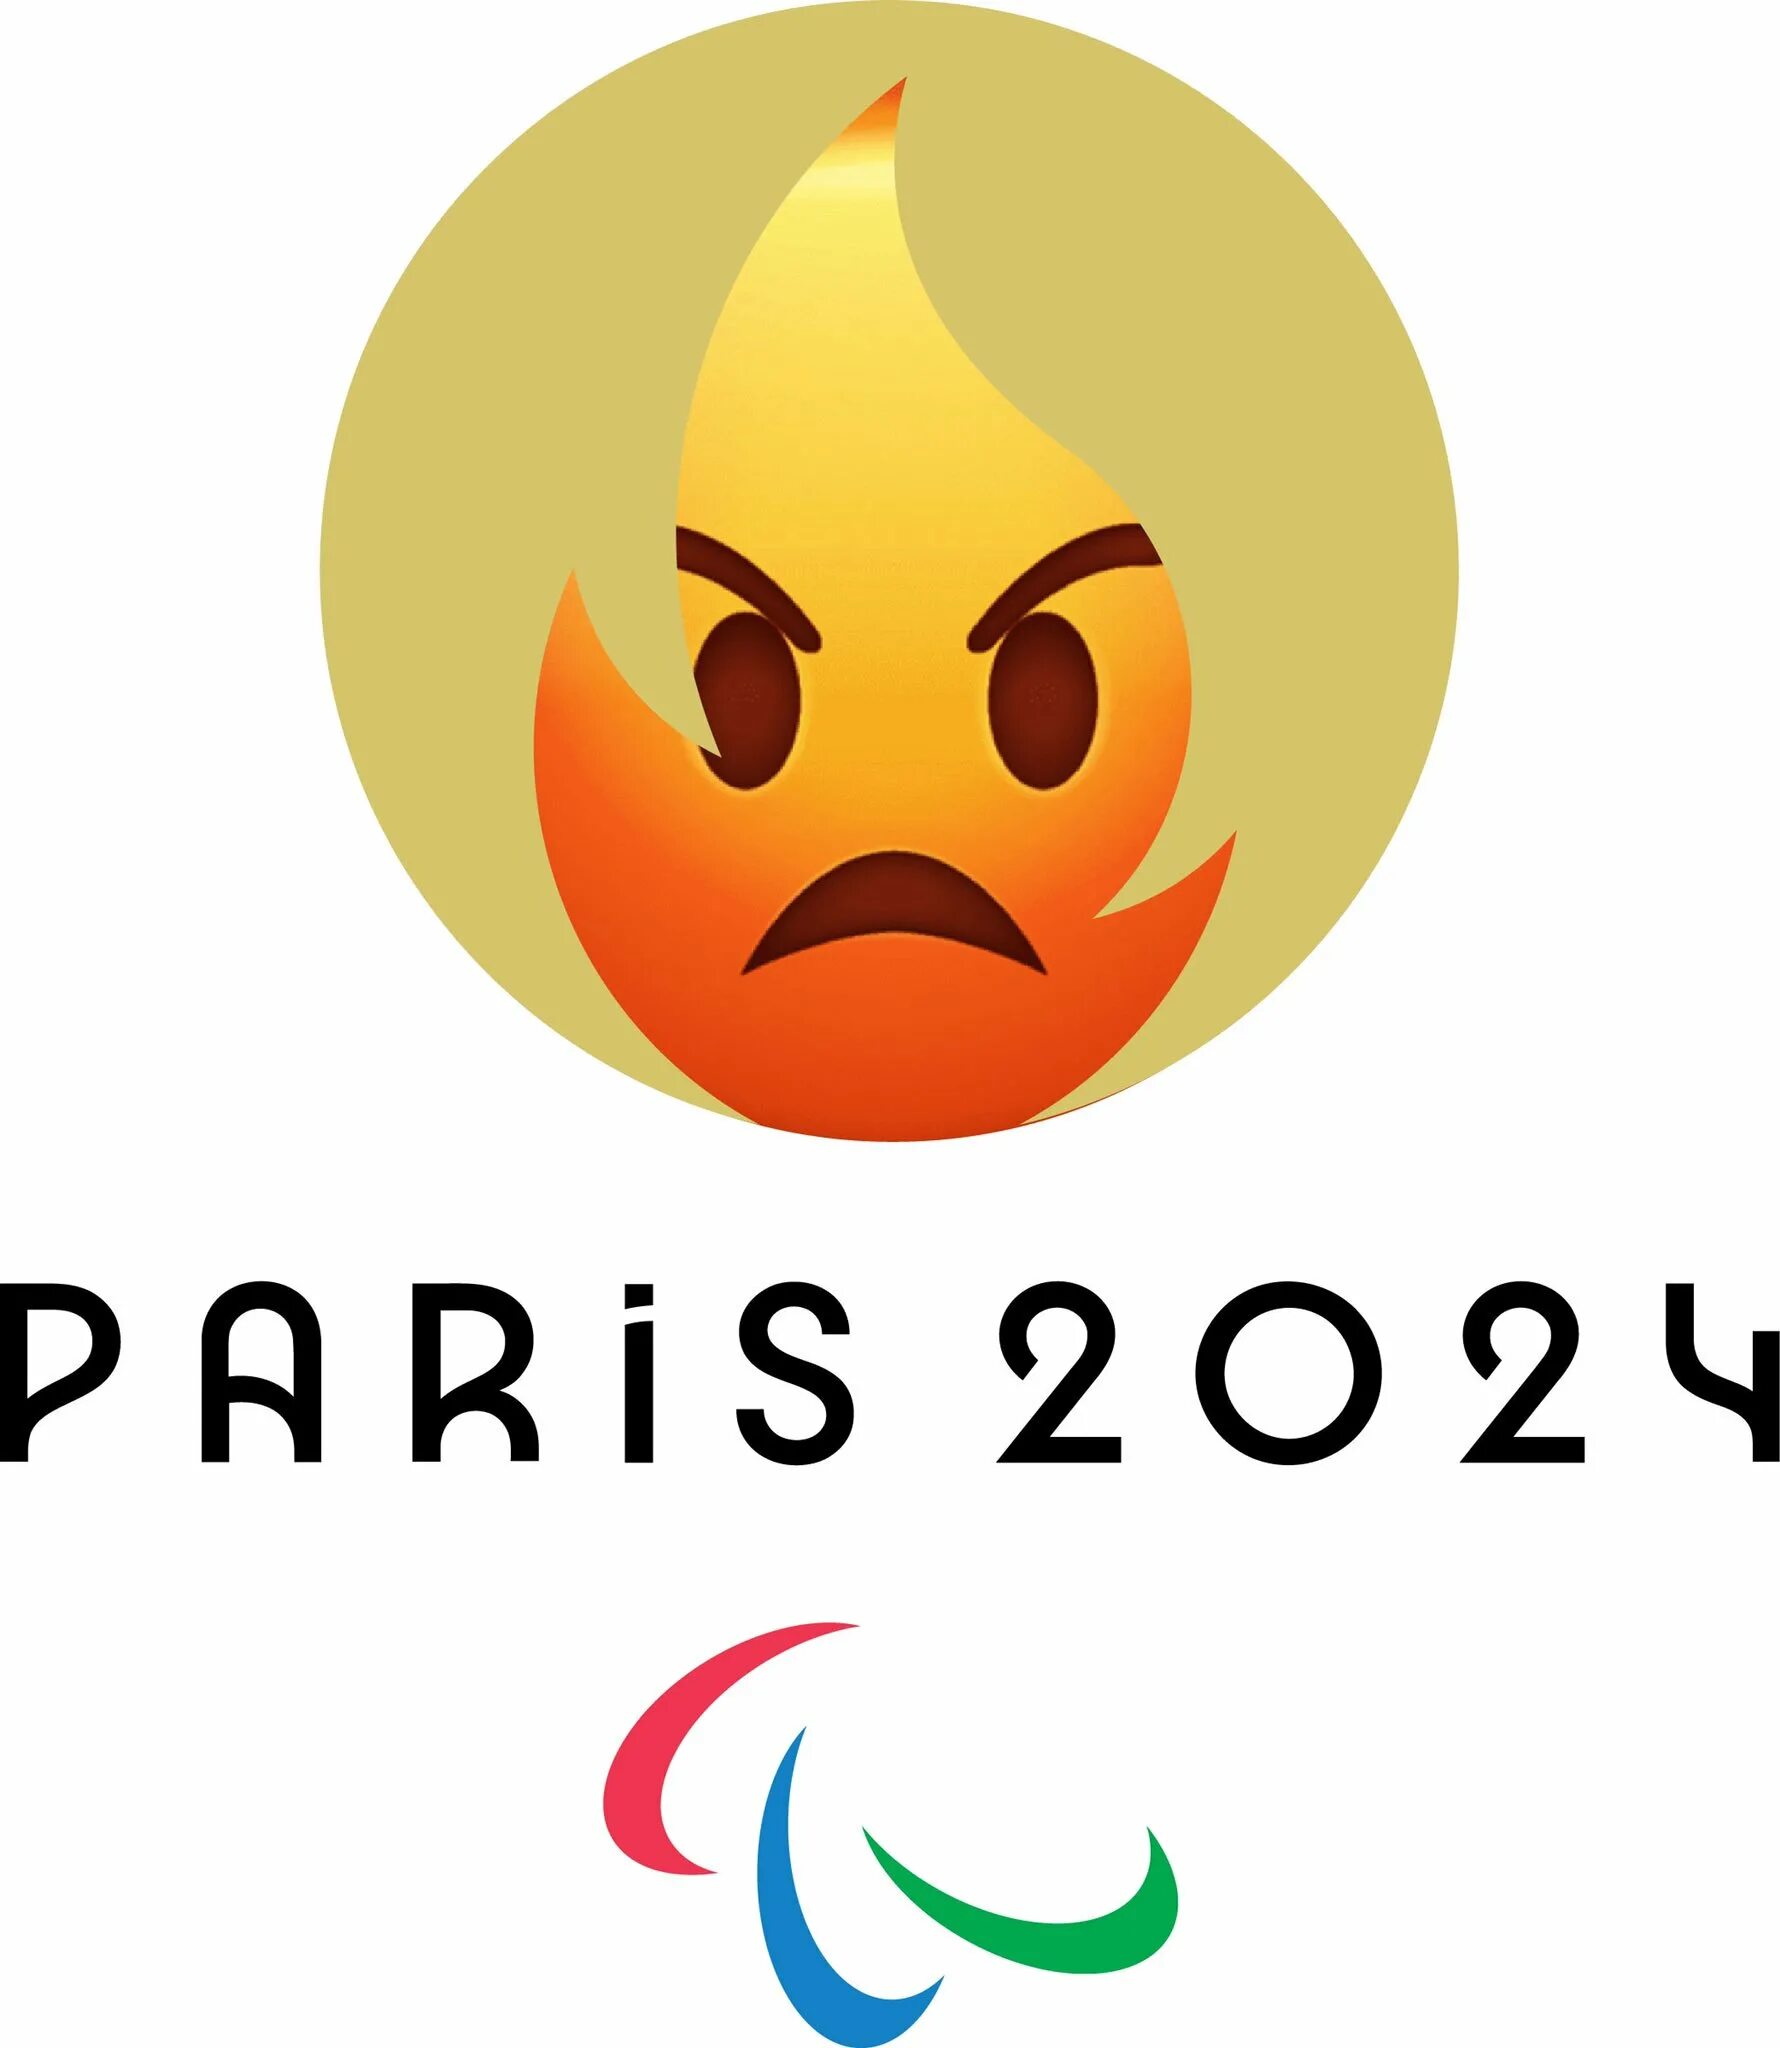 Парк лого 2024. Париж 2024 логотип. Логотип олимпиады 2024. Логотип Олимпийских игр в Париже 2024. Олимпийские игры Париж логотип.